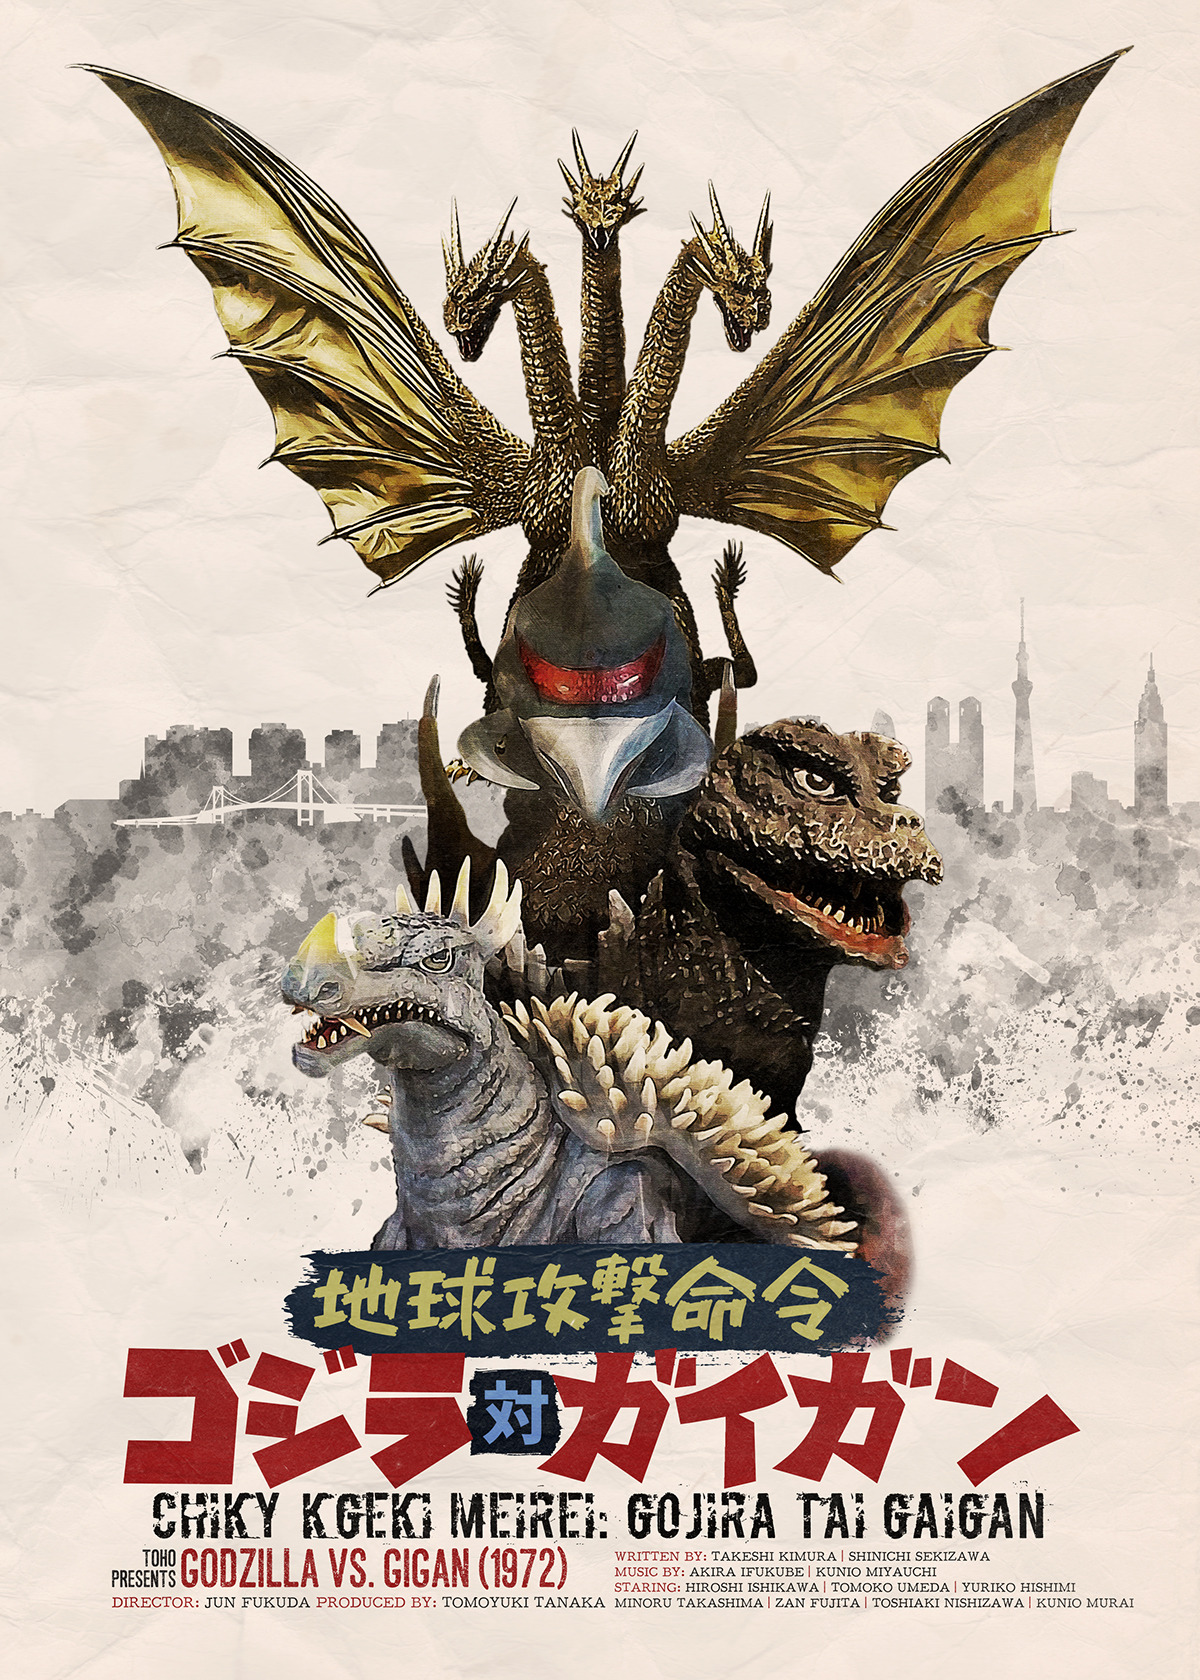 citystompers1:
“Godzilla vs. Gigan (1972), poster by Daniel Clark
”